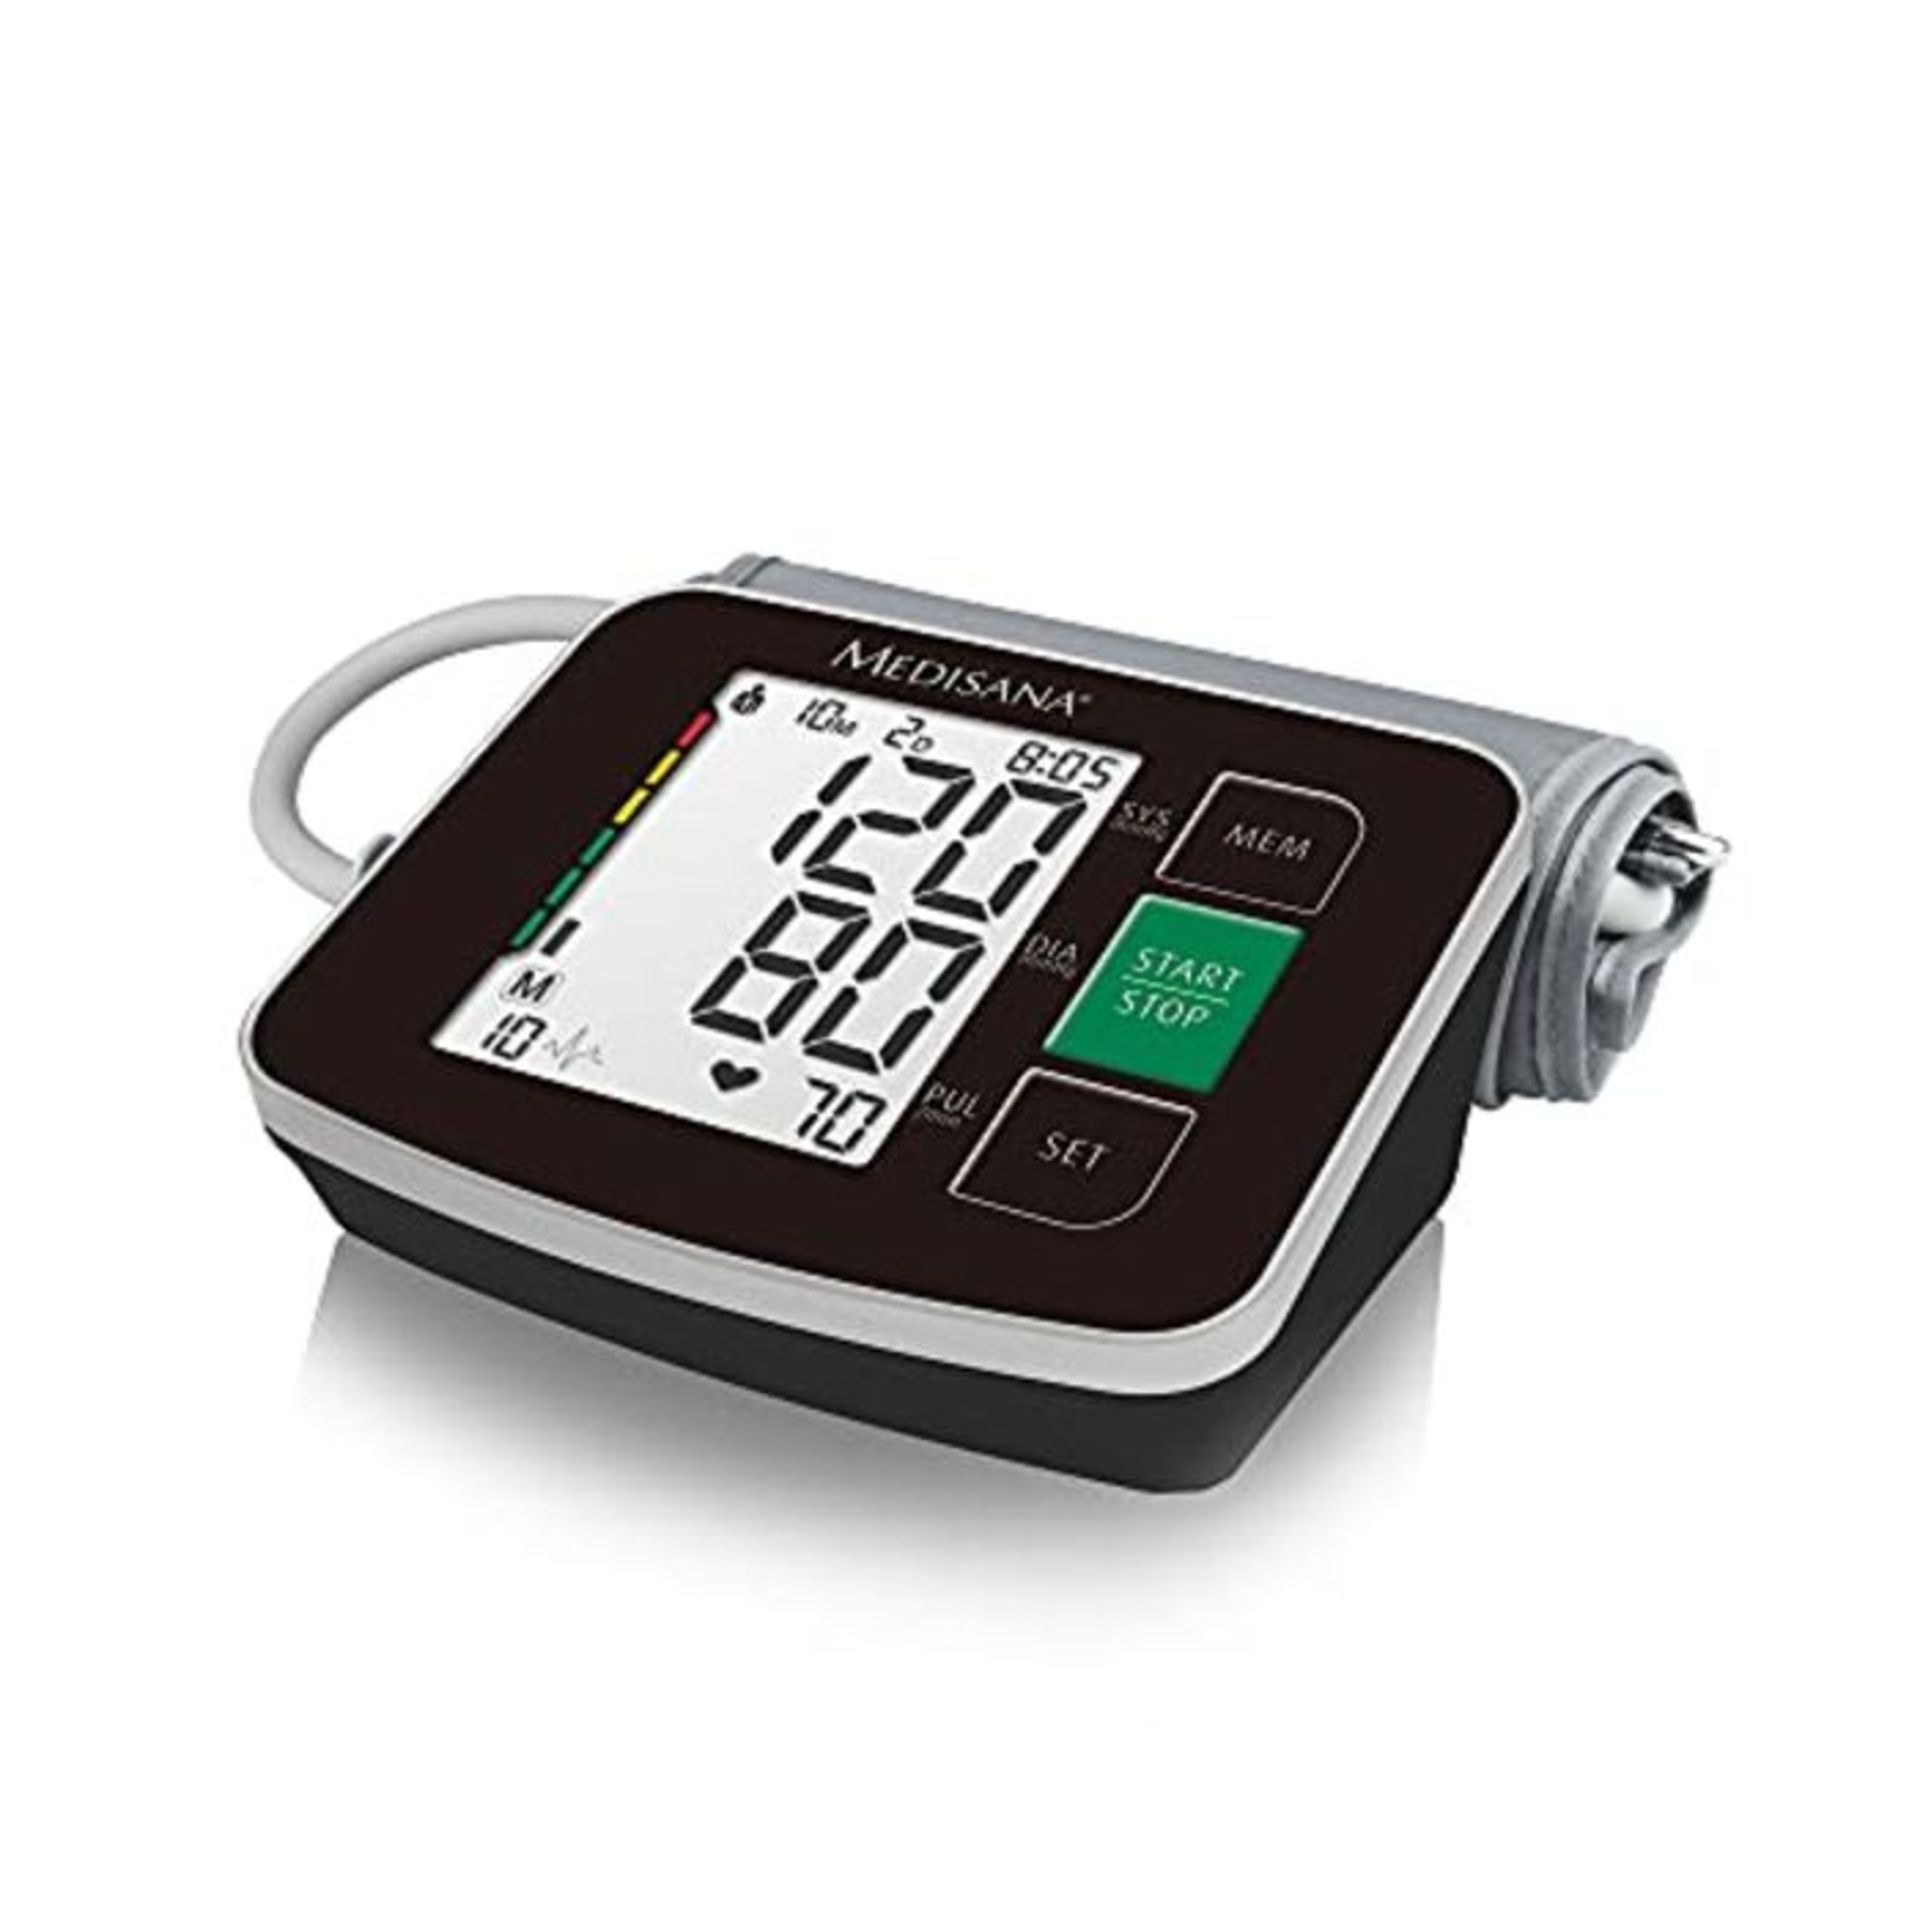 Medisana BU 516 Digital Upper Arm Blood Pressure Monitor in Black - Home Use Heartbeat